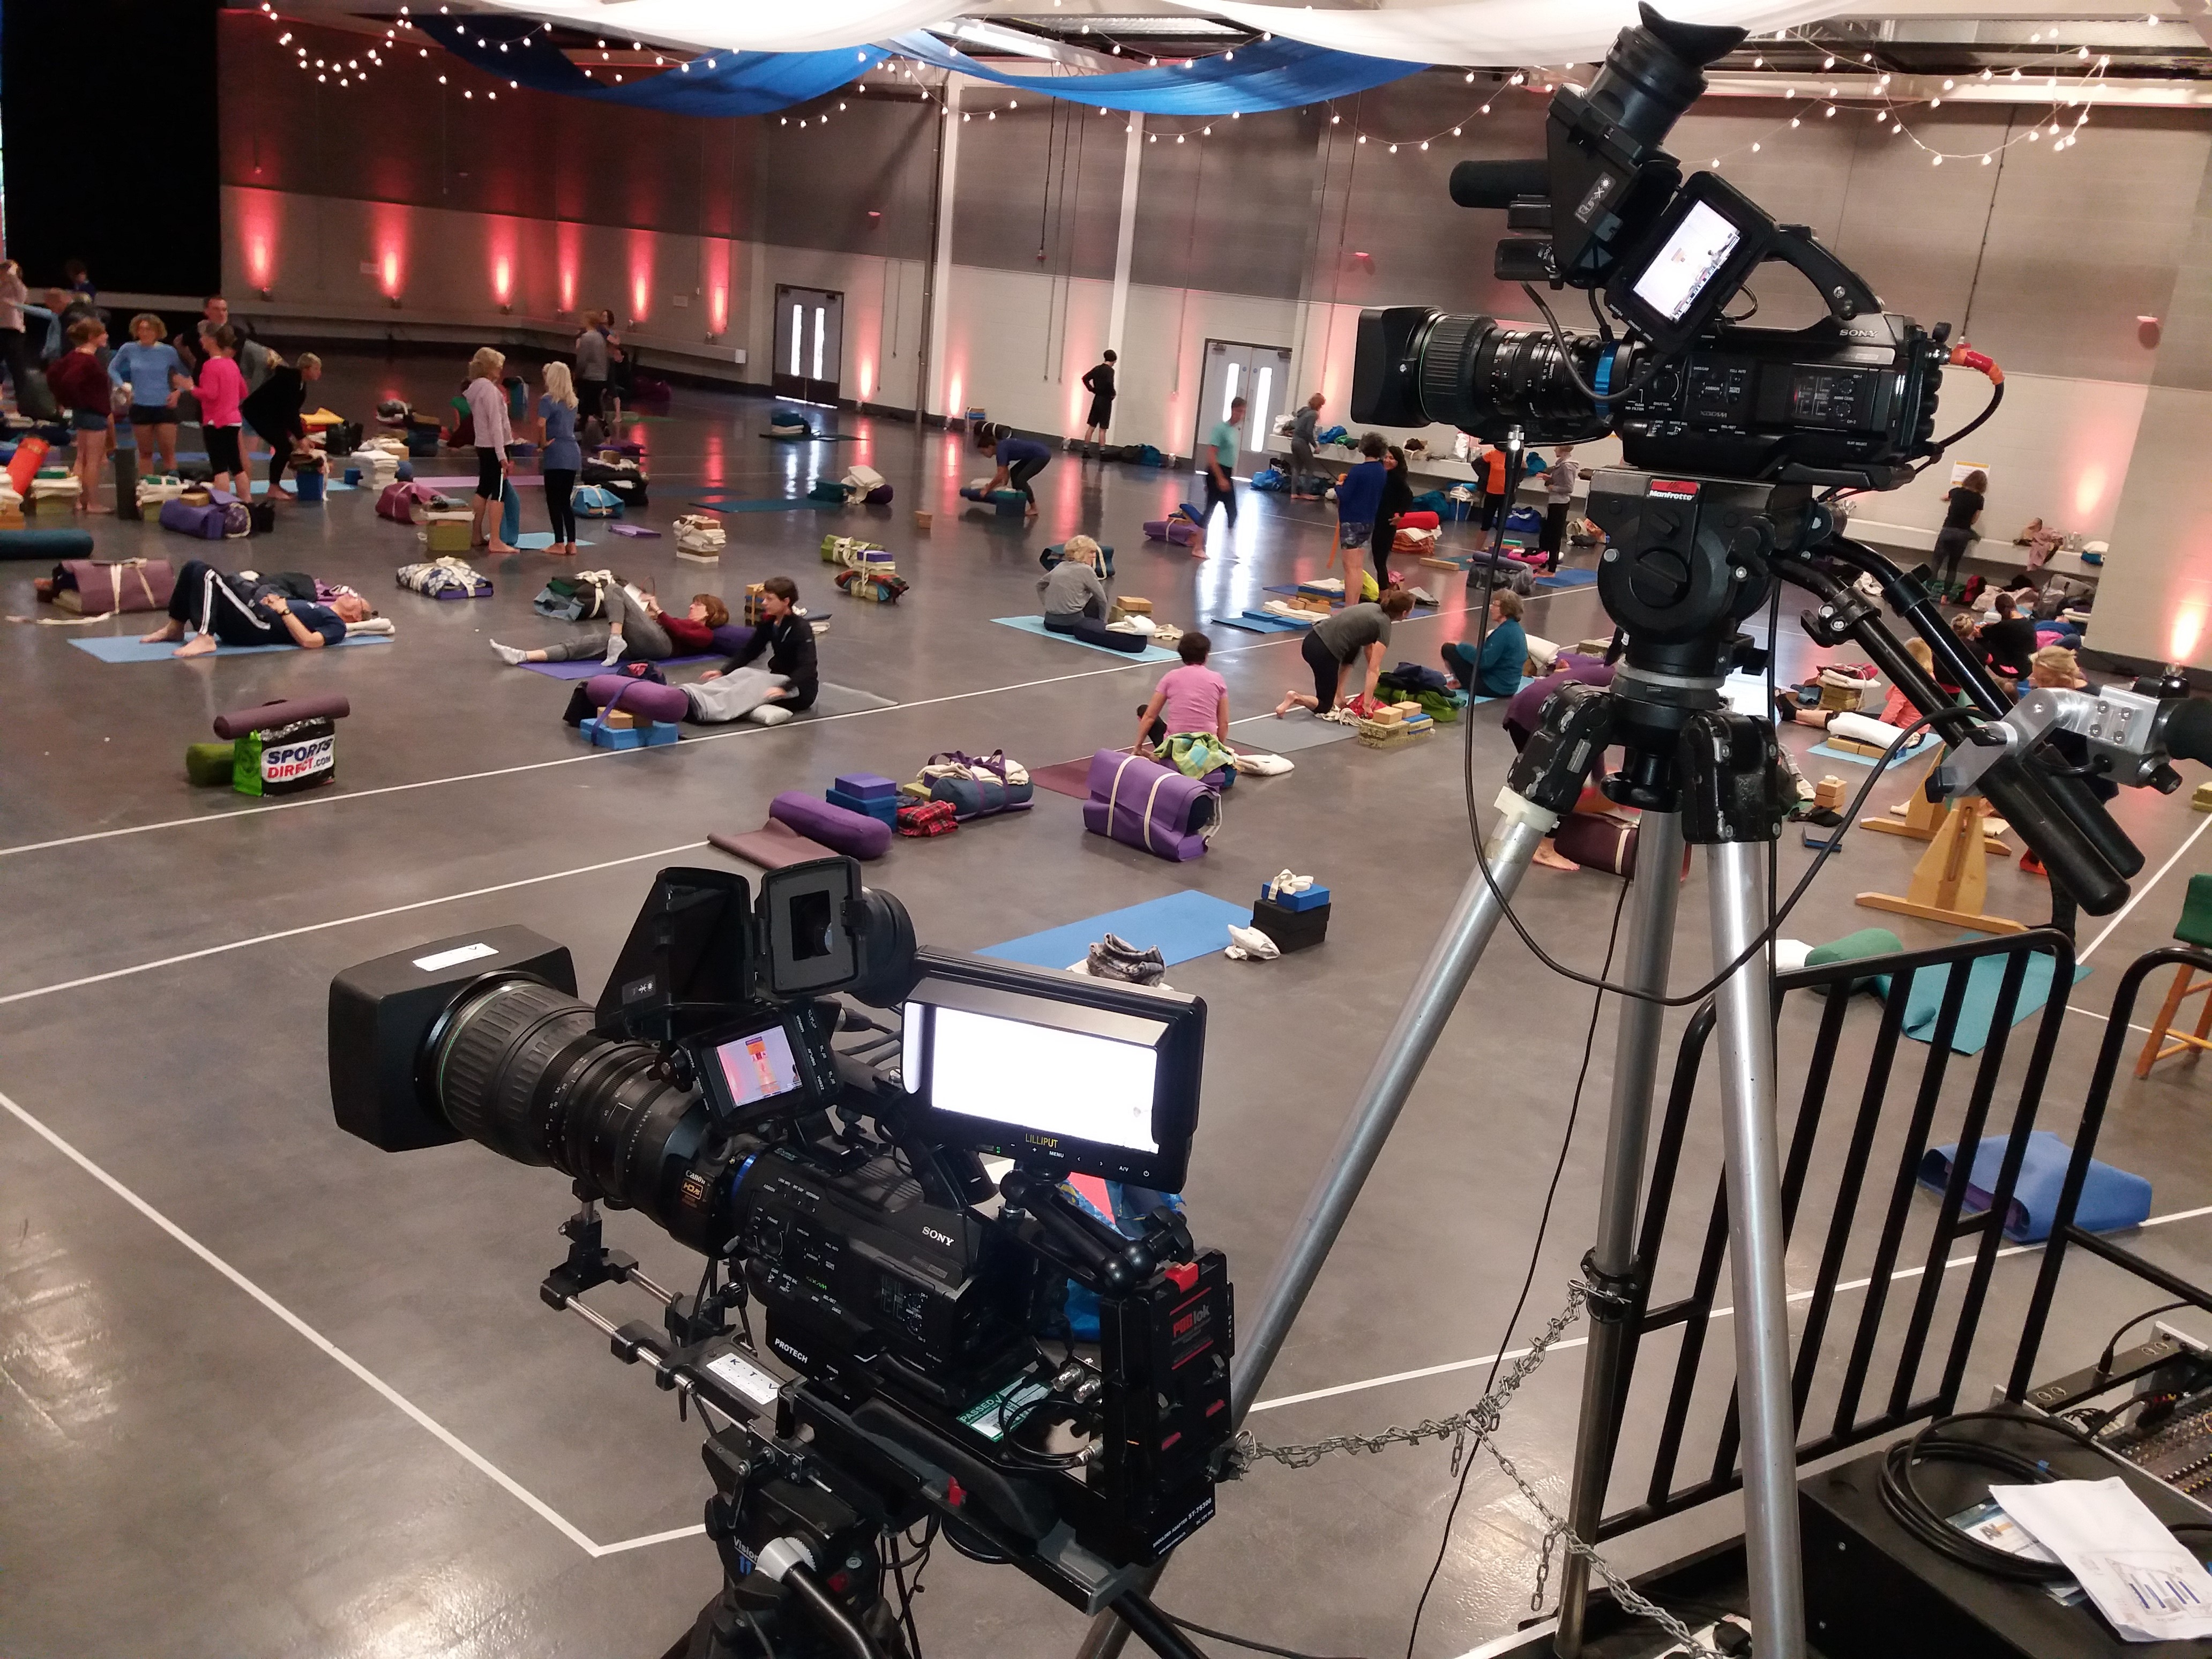 KTV stays flexible at national yoga event in Harrogate